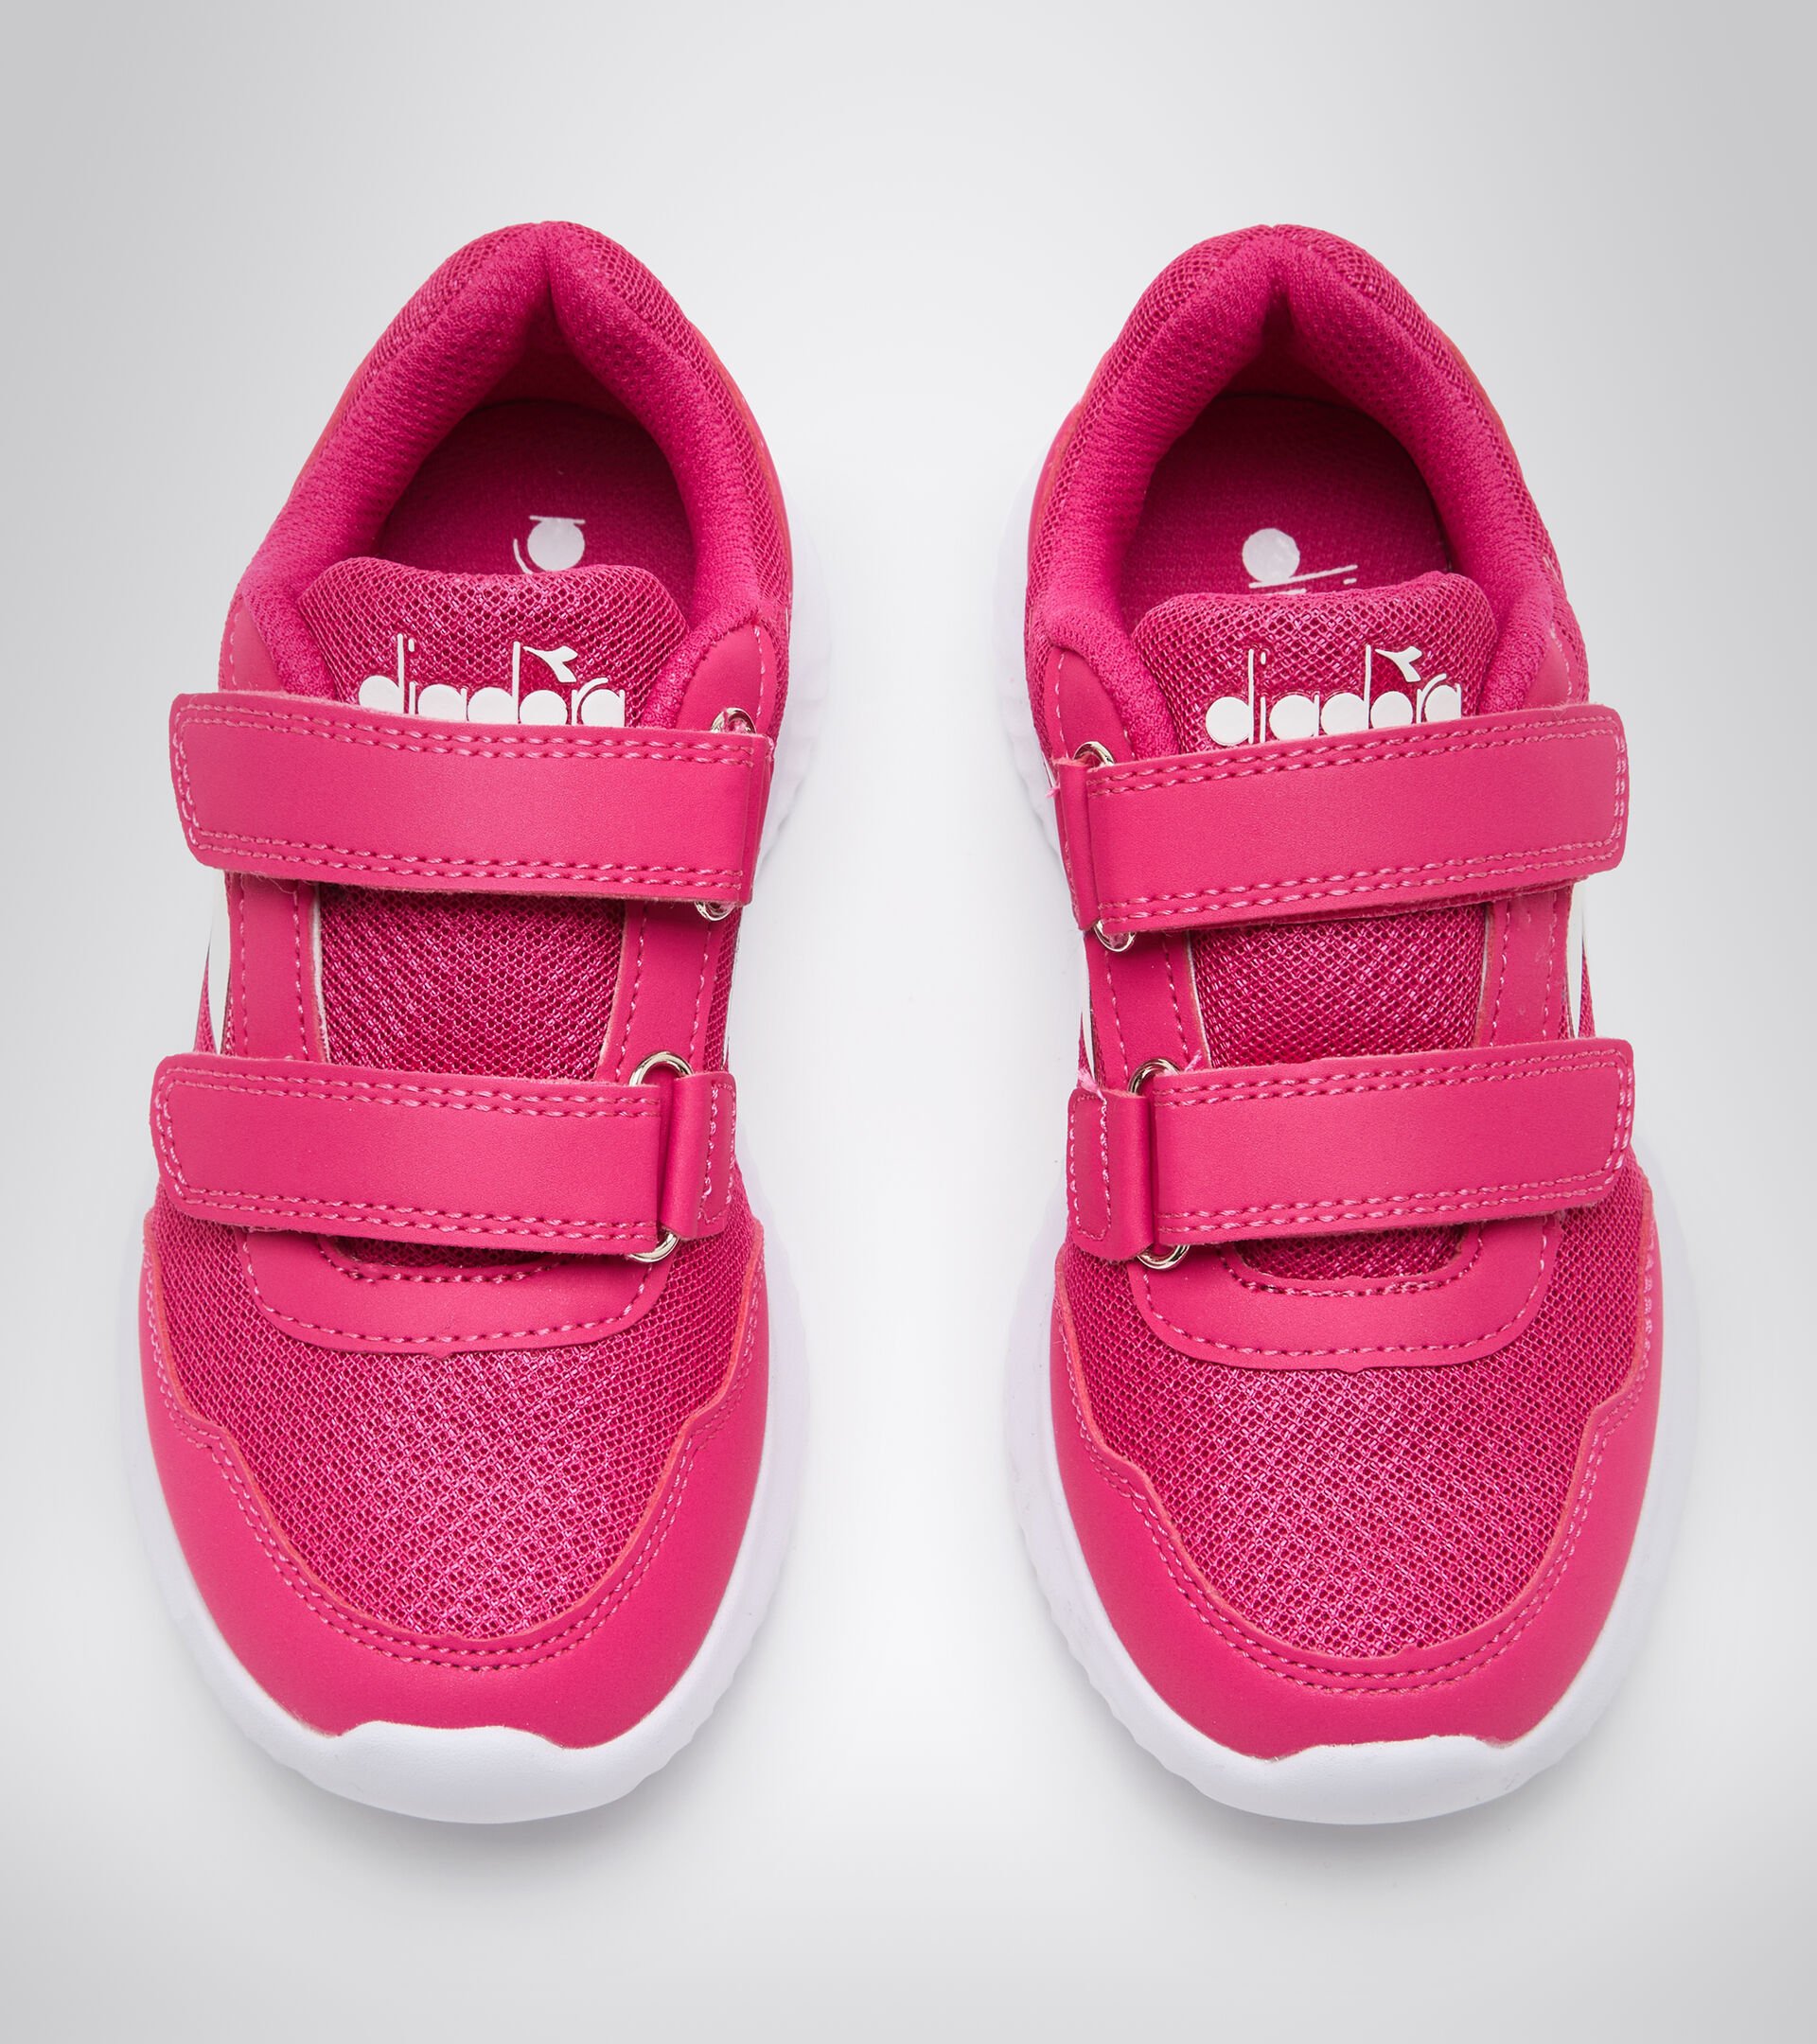 Chaussures de running Junior avec Velcro®- Unisexe ROBIN 3 JR V VIOLET BETTERAVE/BLANC - Diadora